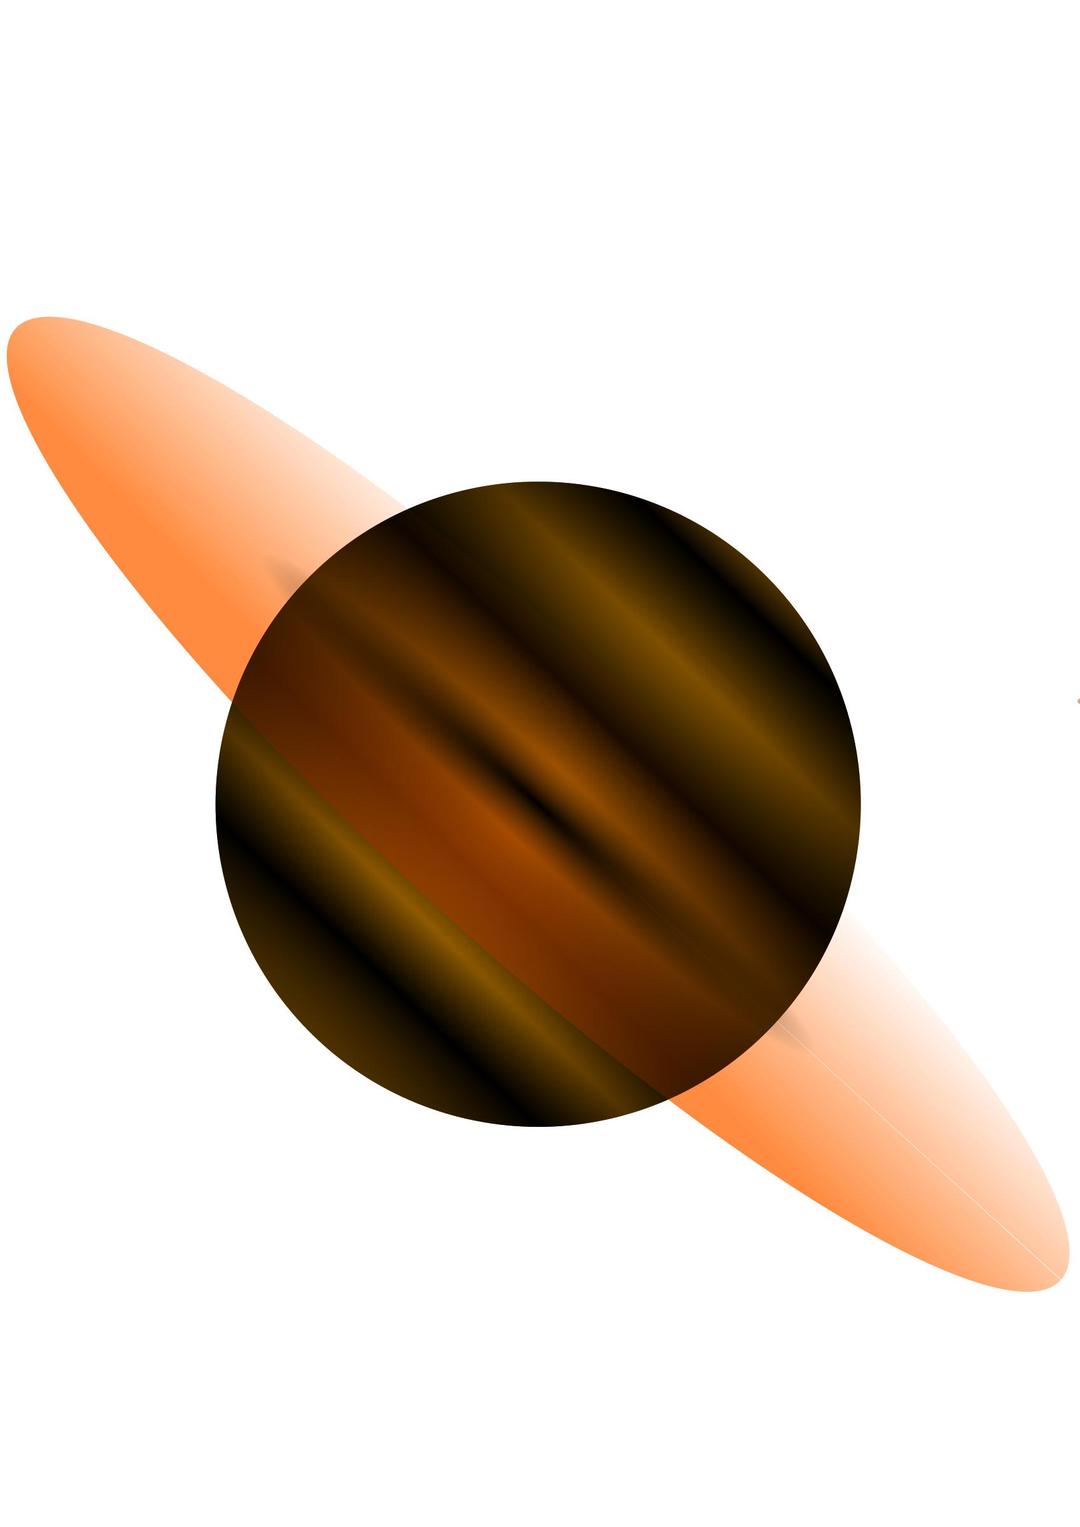 Planeta Saturno- Saturn Planet png transparent